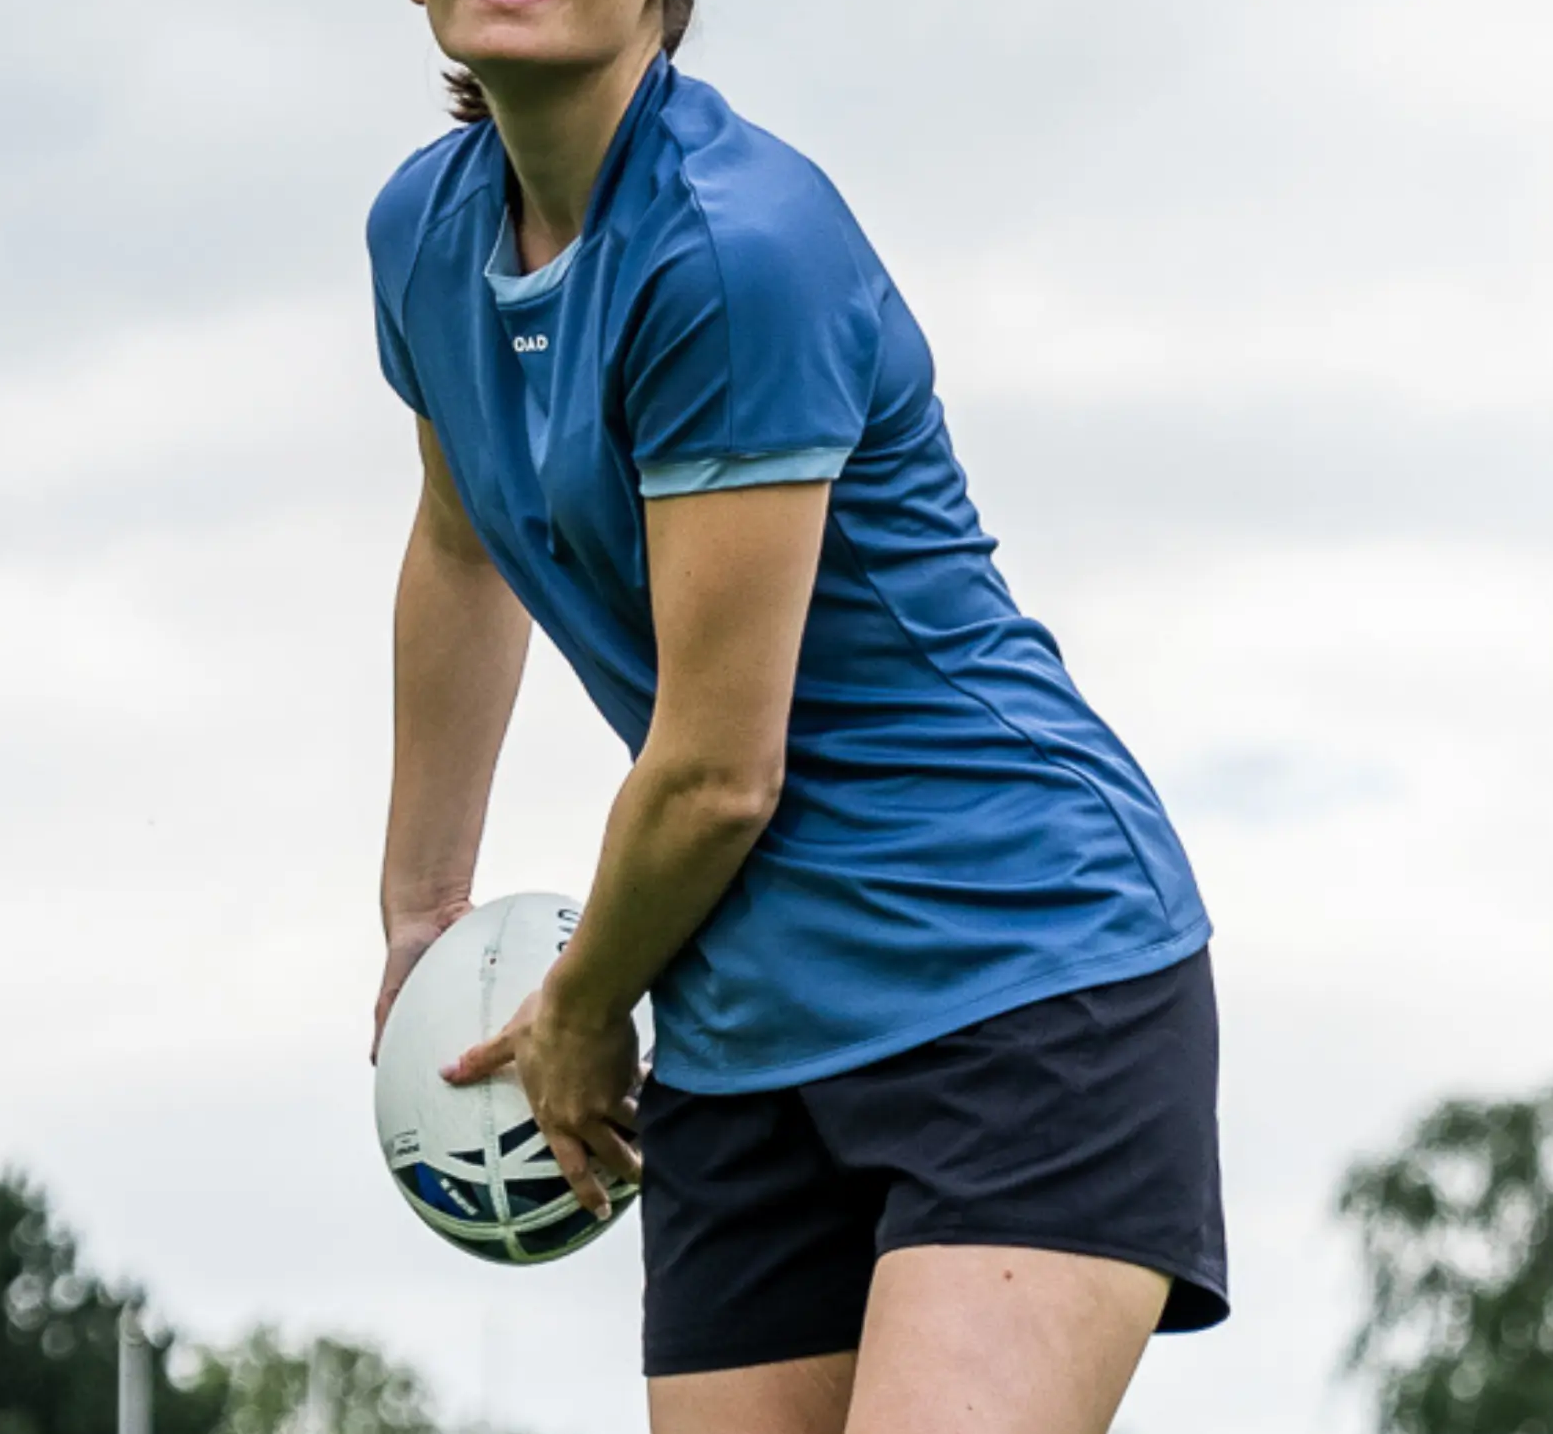 conseils-rugby-comment-choisir-son-équipement-de-rugby-féminin